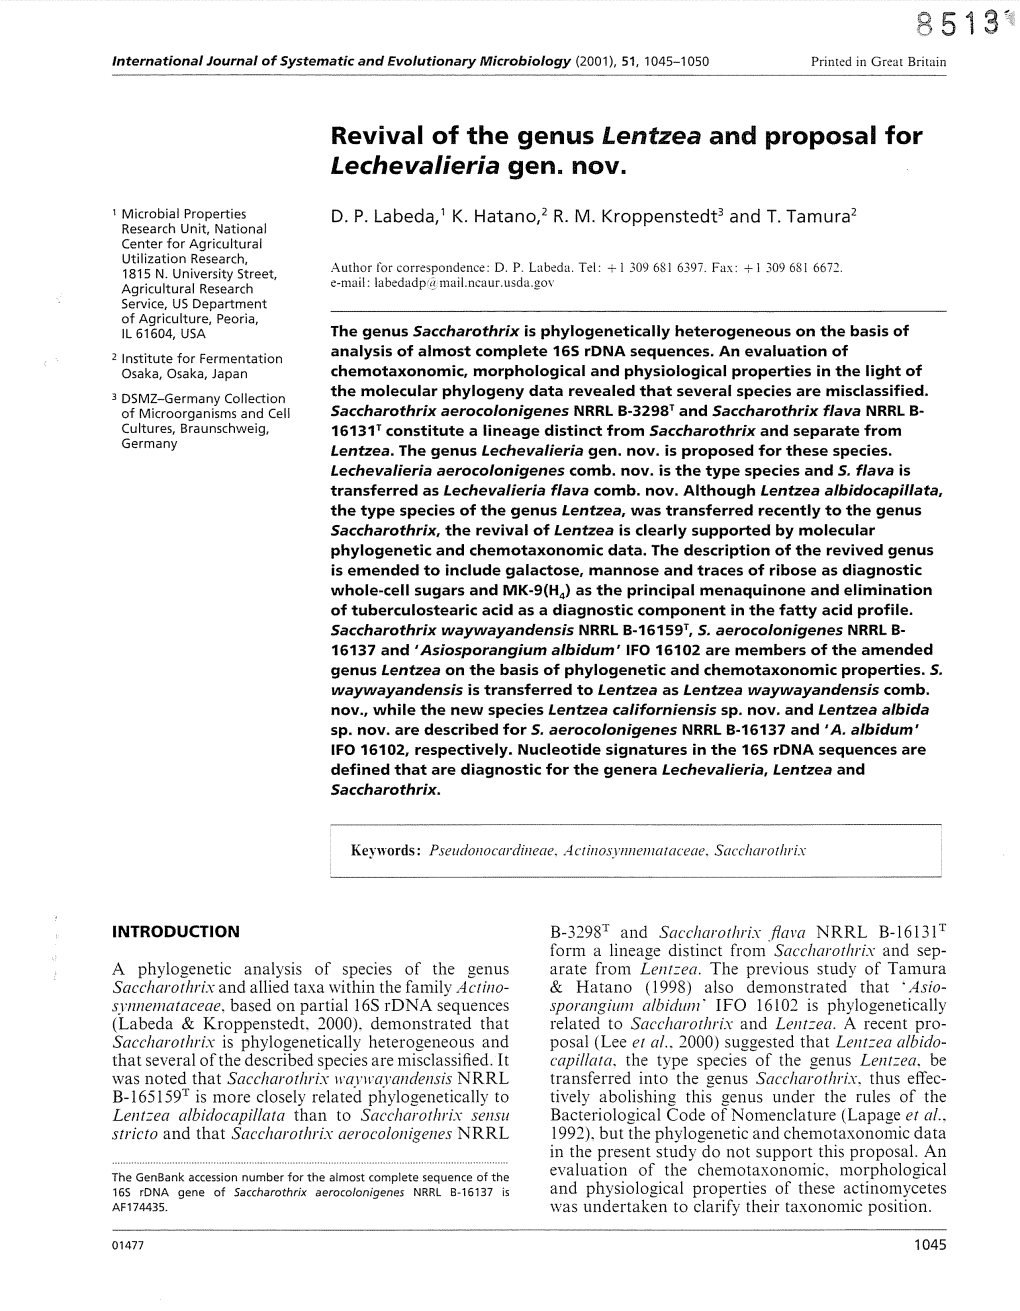 Revival of the Genus Lentzea and Proposal for Lechevalieria Gen